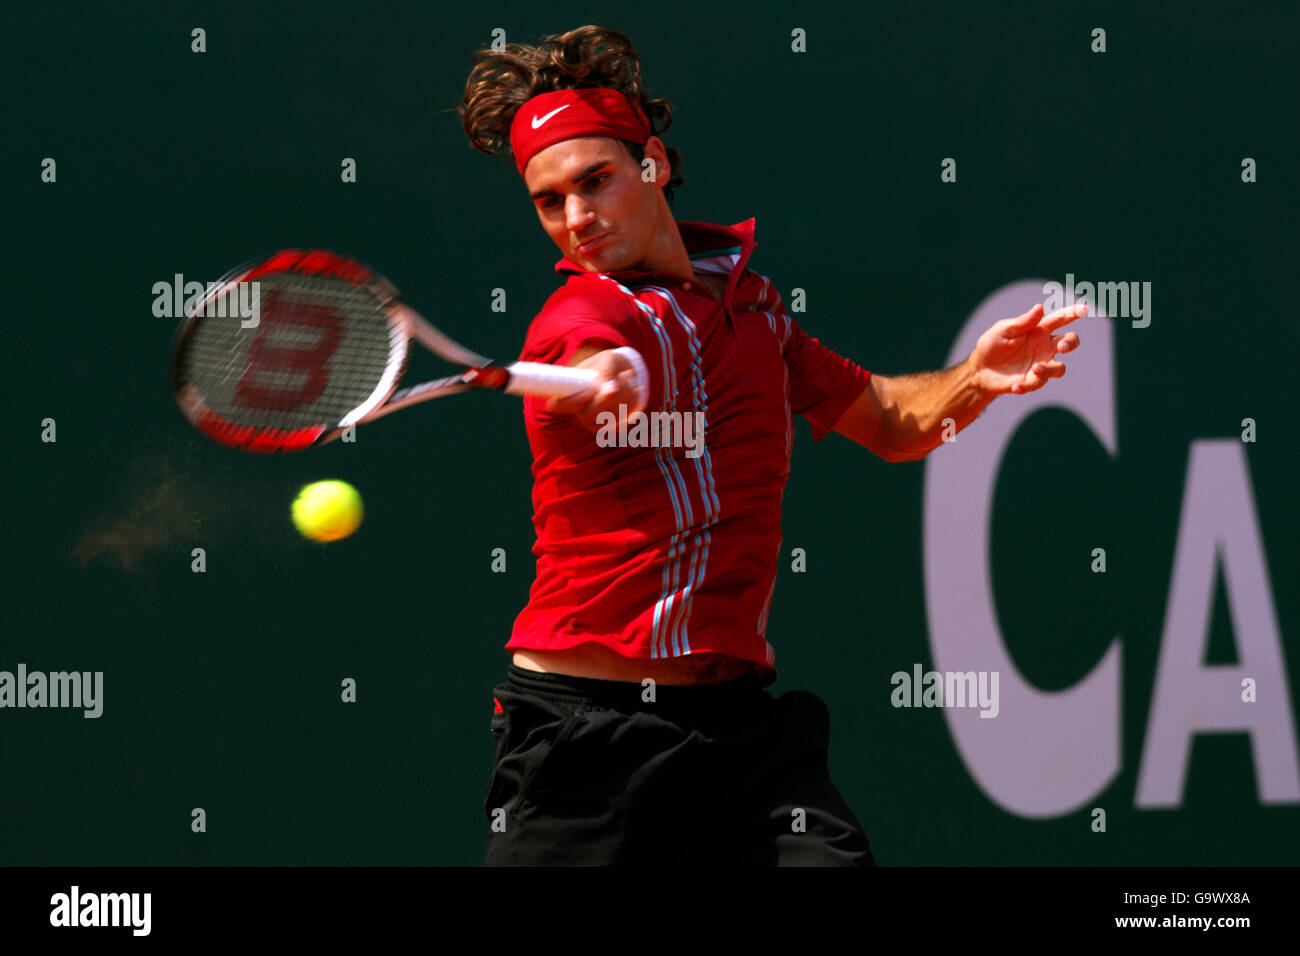 Tennis - ATP Masters Series - Monte Carlo - Finale - Roger Federer gegen Rafael Nadal. Roger Federer, Schweiz Stockfoto